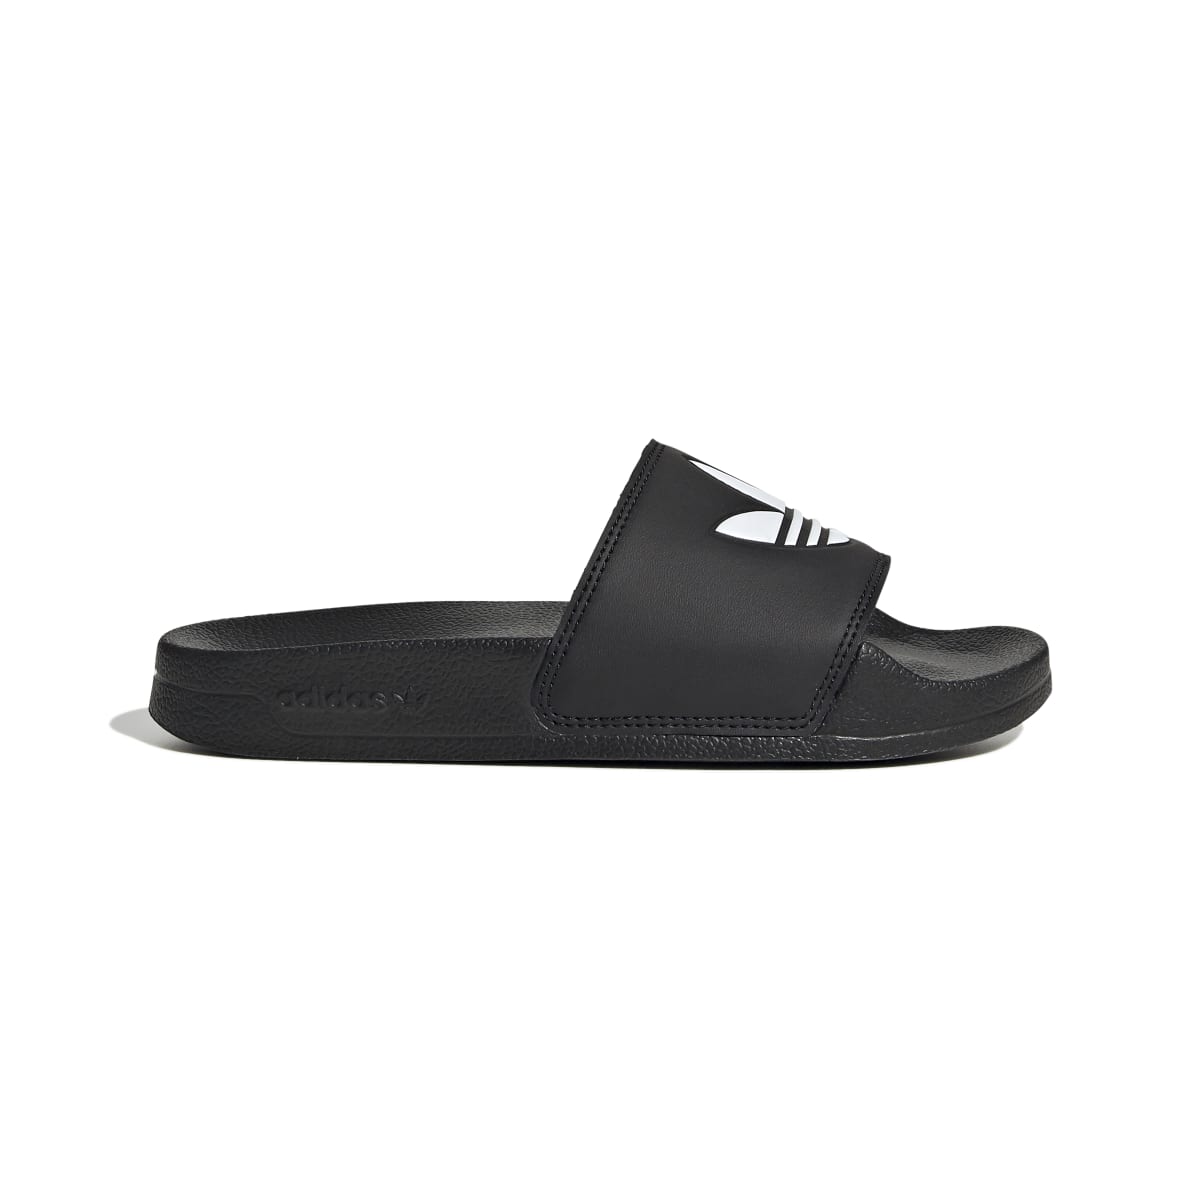 Brands > Adidas > Boy's Shoes > Boy's Sandals/Slides